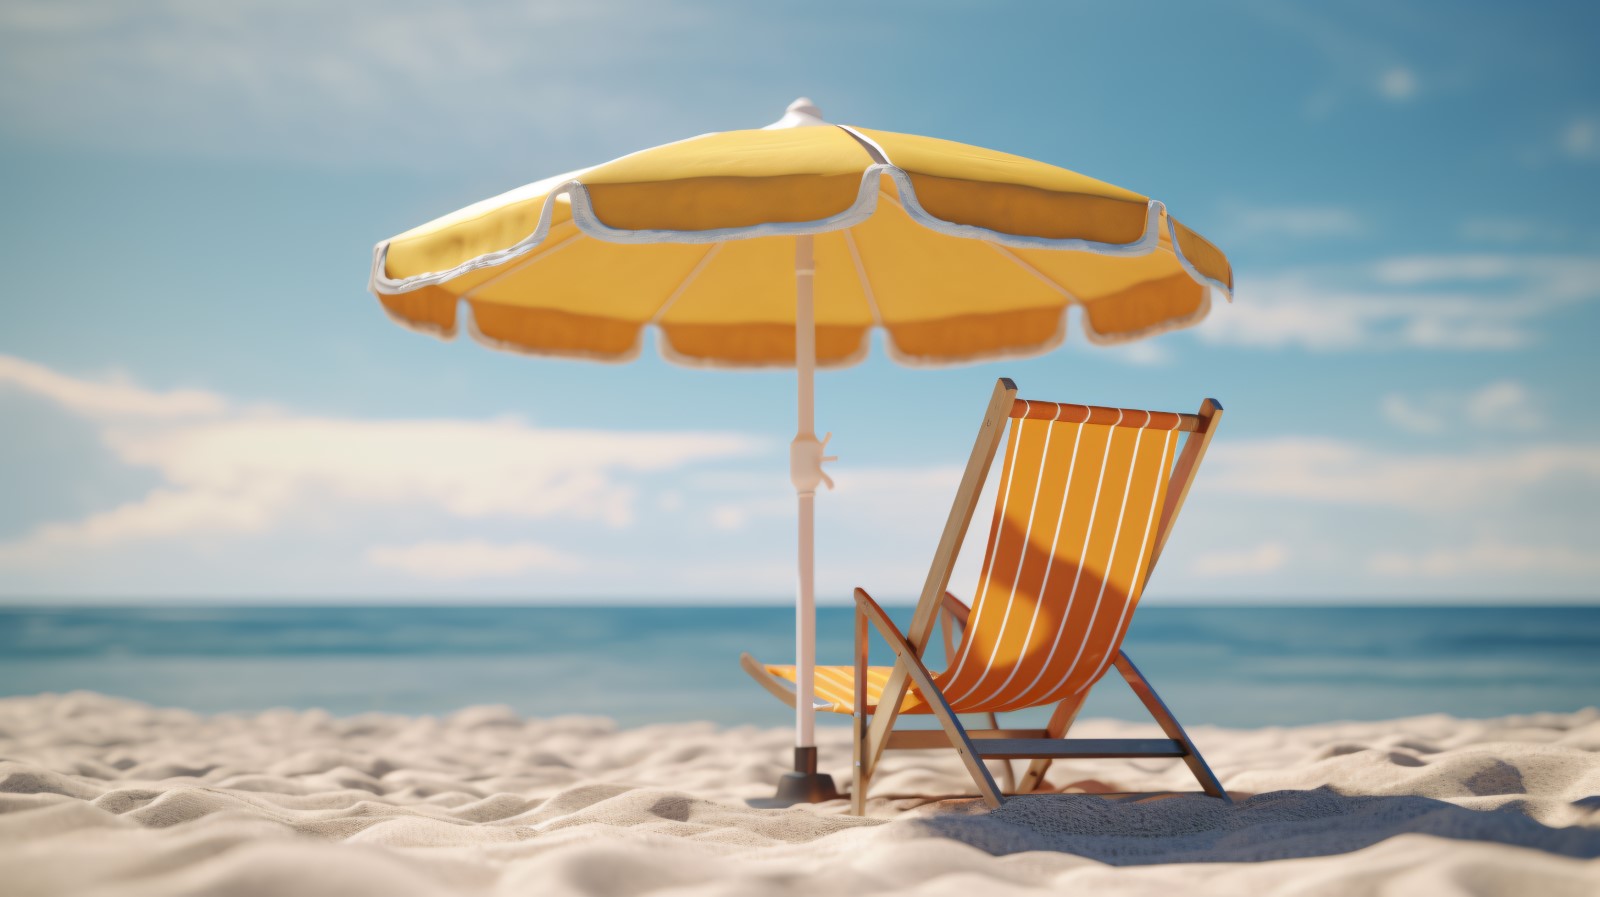 Beach summer Outdoor Beach chair with umbrella sunny day 227